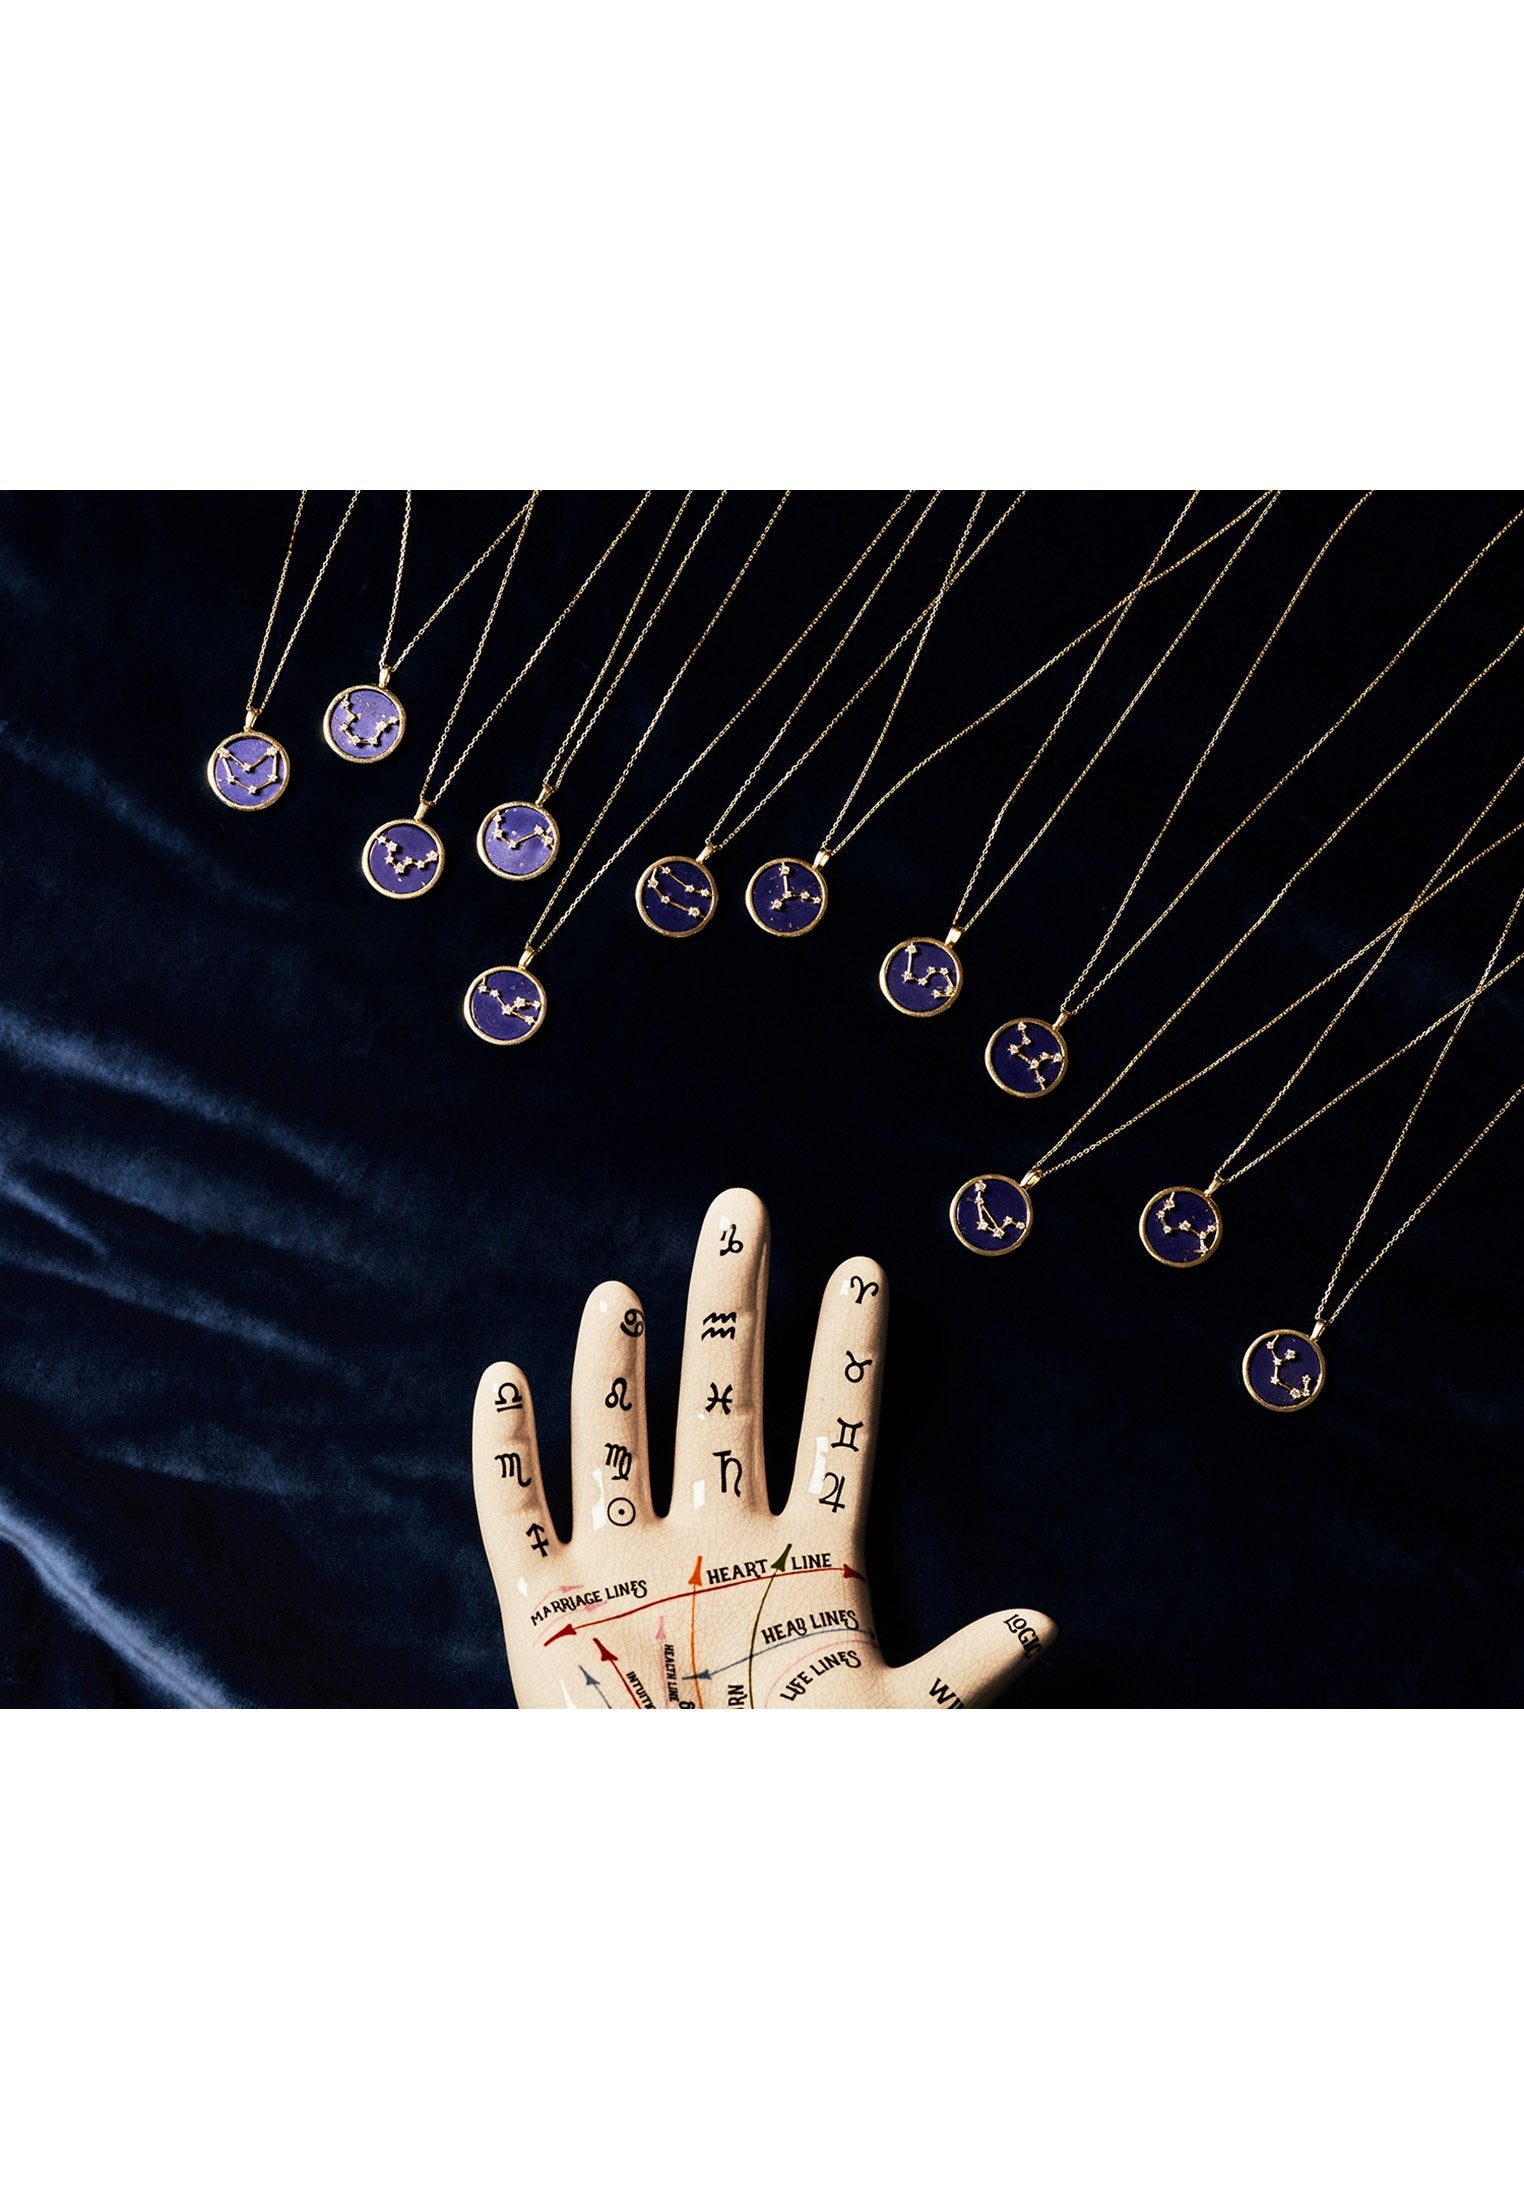 Lapis Lazuli Zodiac Constellation Pendant Necklace in Gold - Taurus Birth Sign Jewelry - Jewelry & Watches - Bijou Her -  -  - 